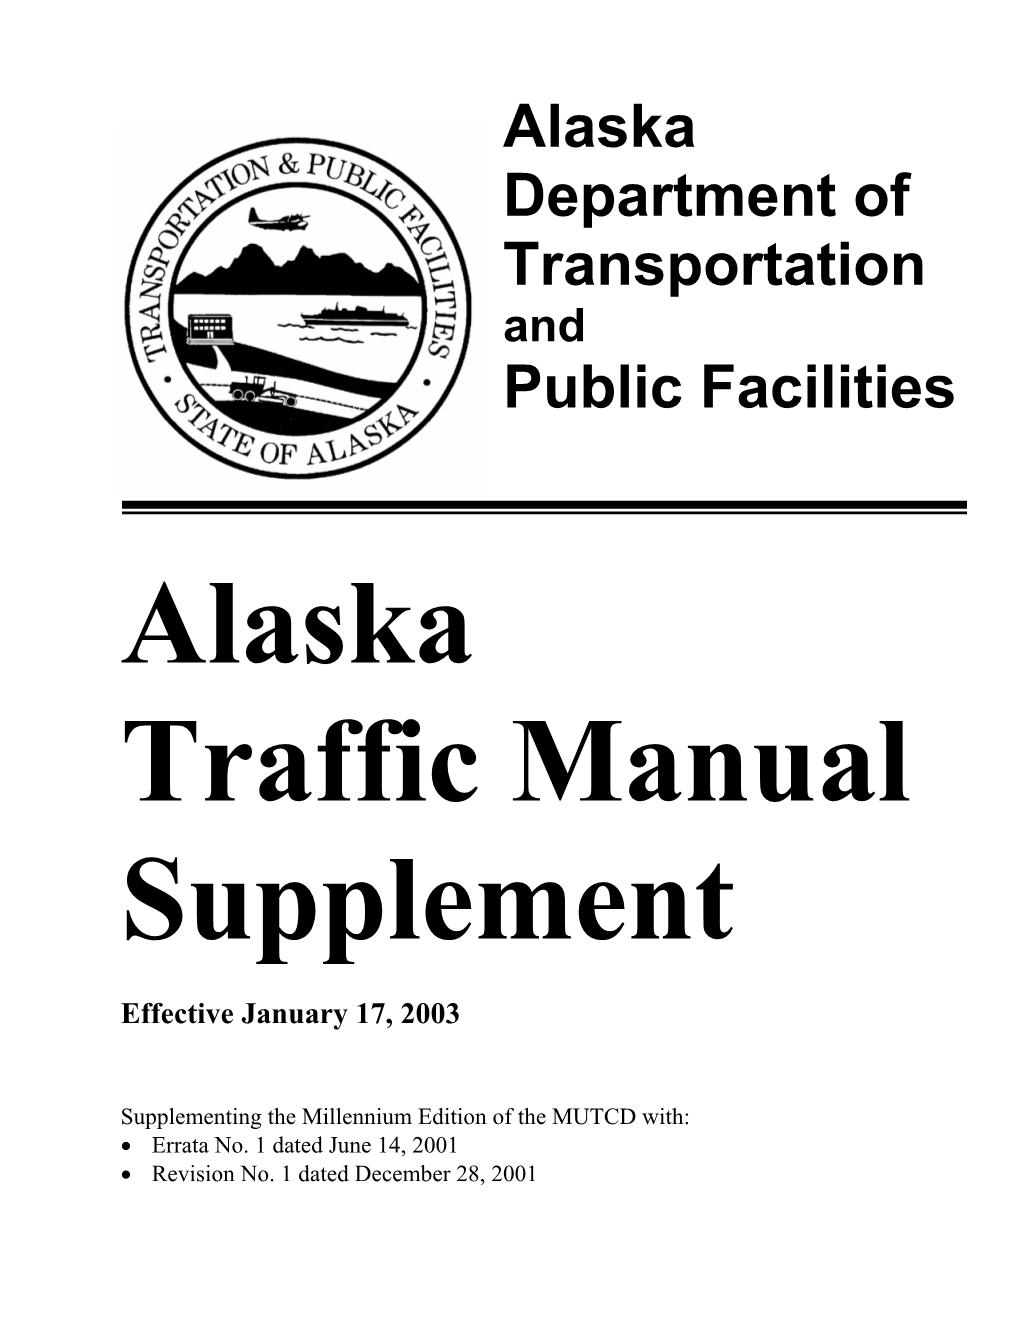 Alaska Traffic Manual Supplement, Effective 01/17/03